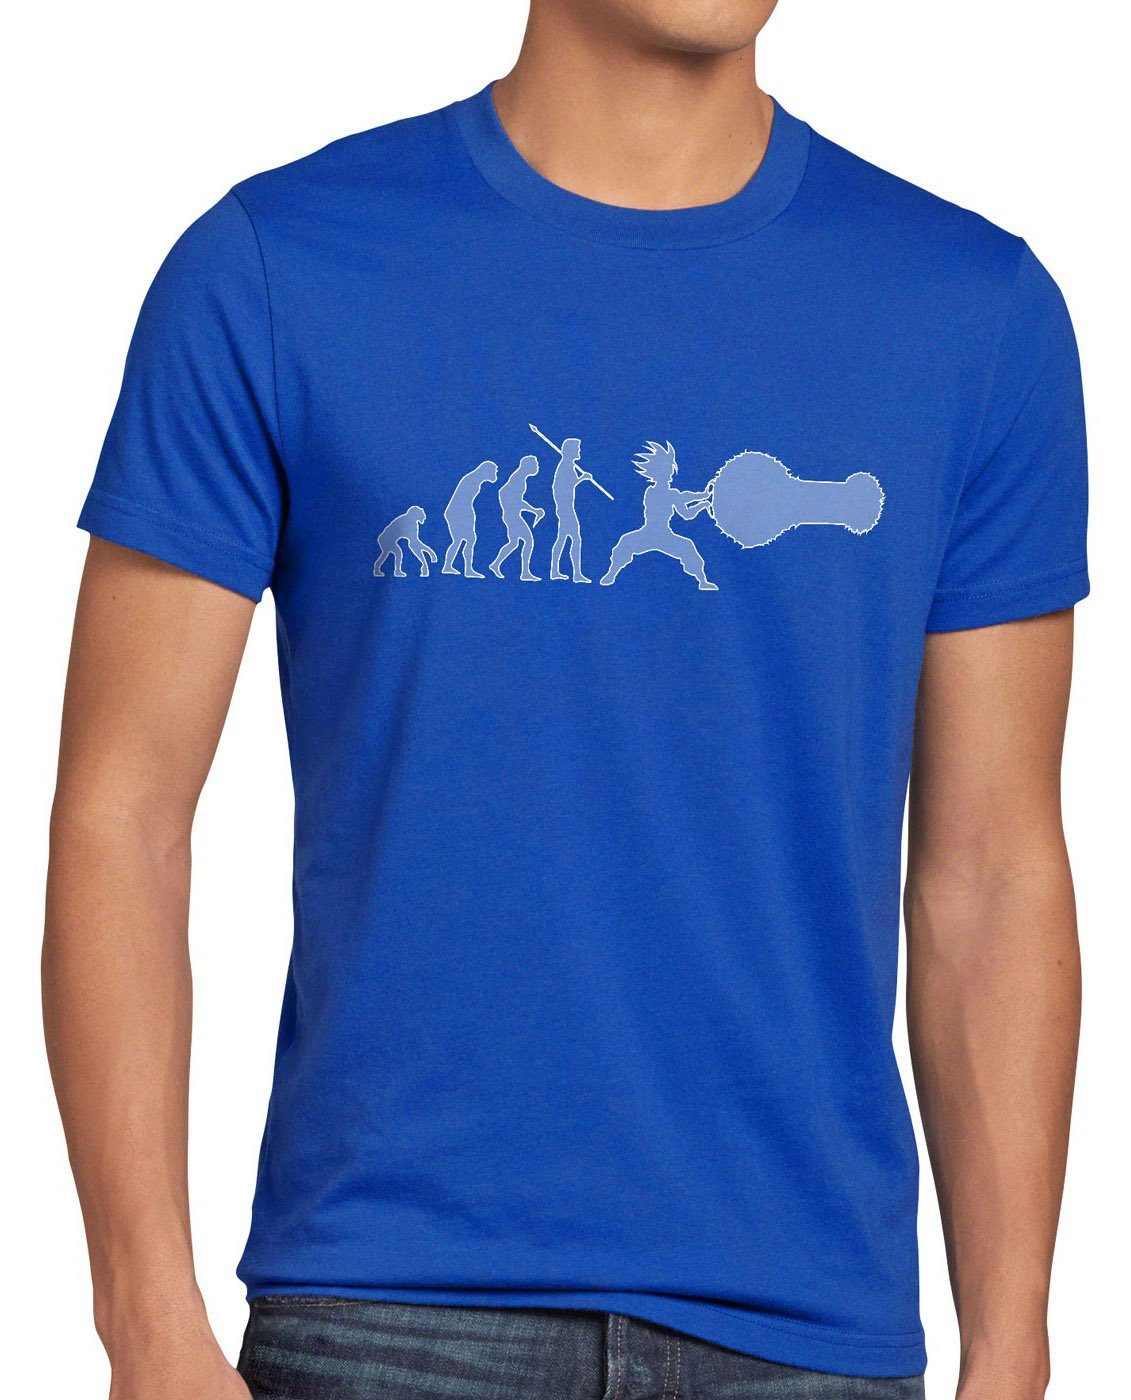 style3 Print-Shirt Herren T-Shirt Sayalution Evolution Goku Dragon son ball fusion vegeta funshirt blau